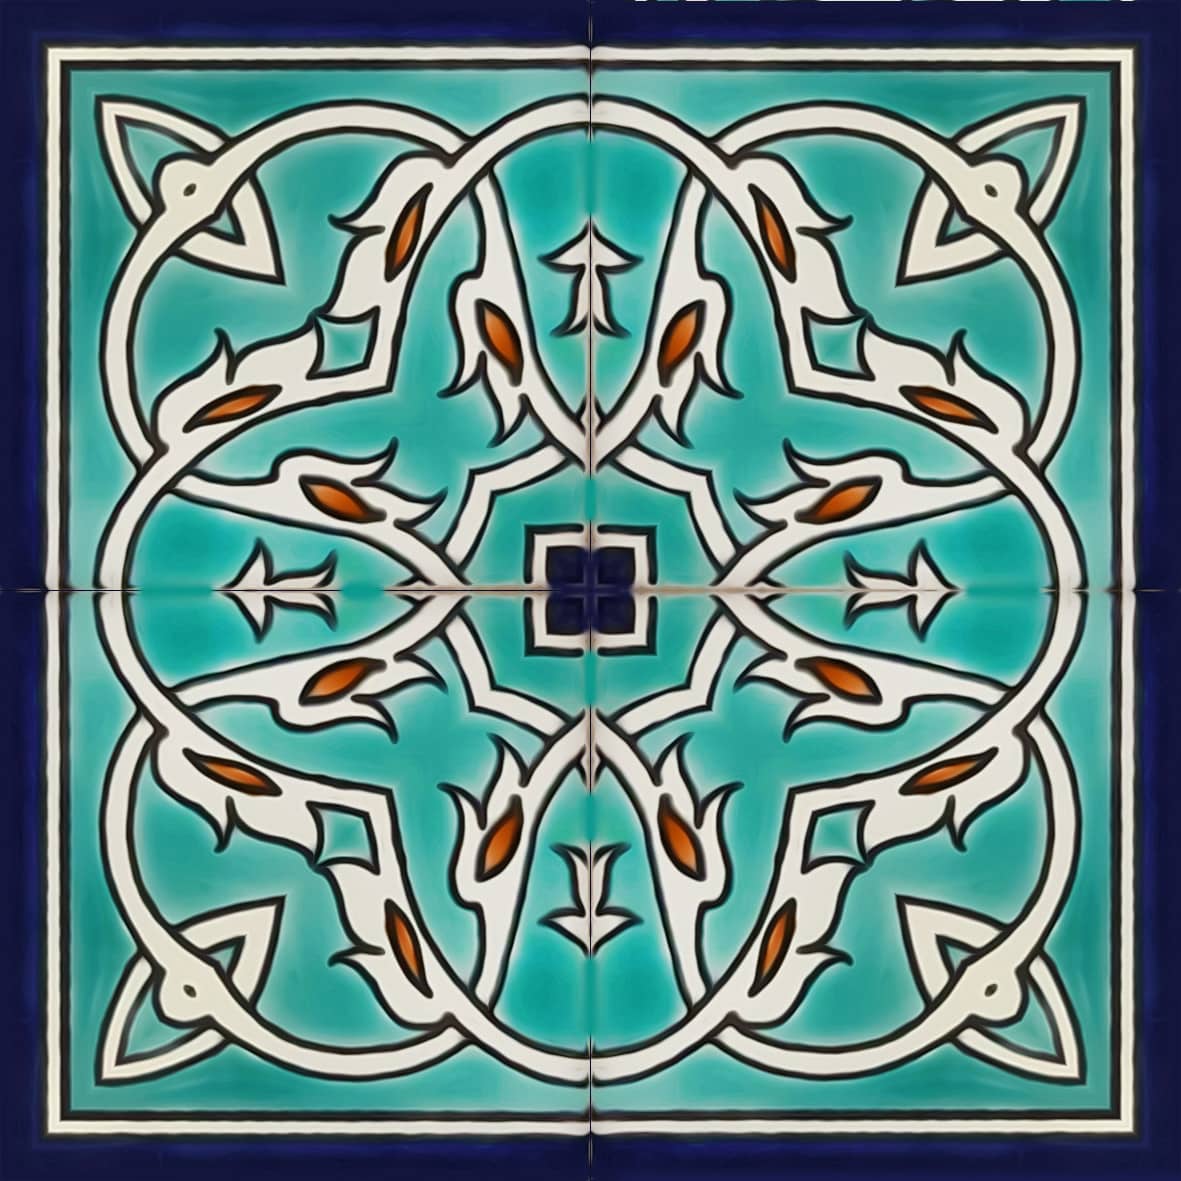 Chain light blue tile pattern